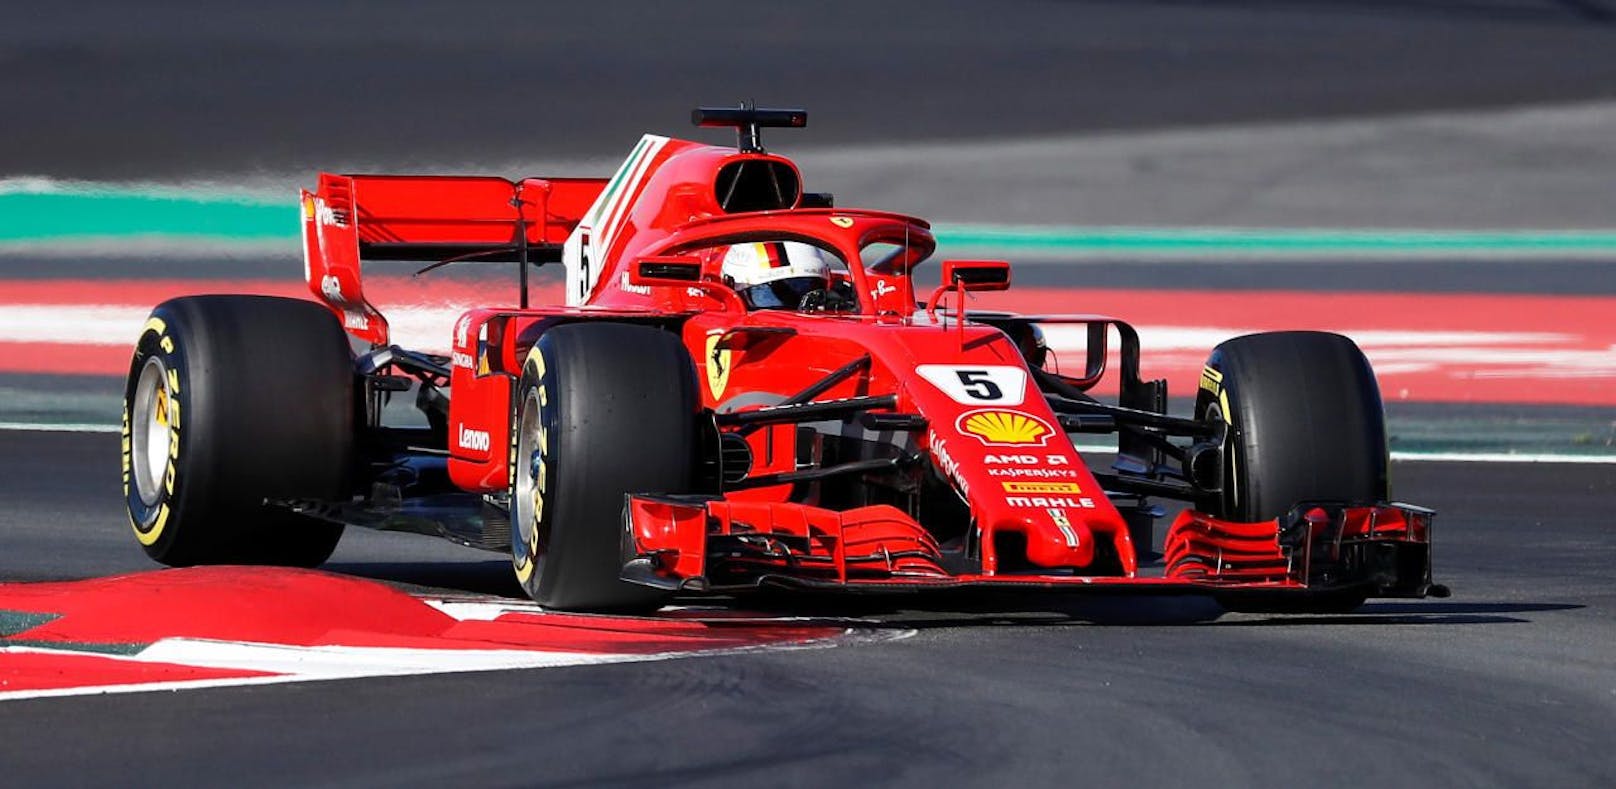 Doppel-Pole für Ferrari, Mercedes chancenlos